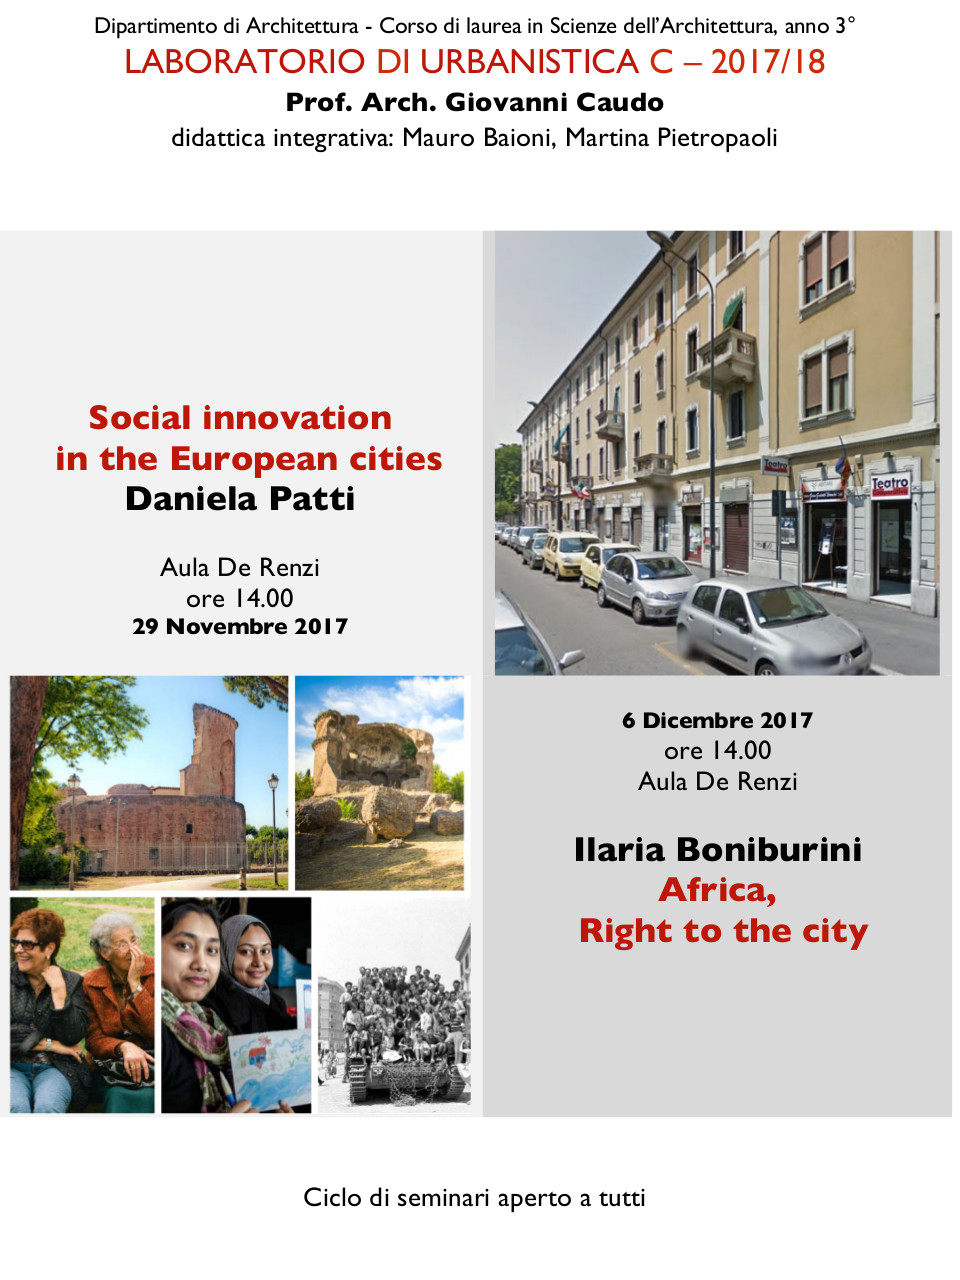 Social innovation in the European cities, Daniela Patti, 29/11/2017 --- Africa, Right to the city, Ilaria Boniburini, 6/12/2017